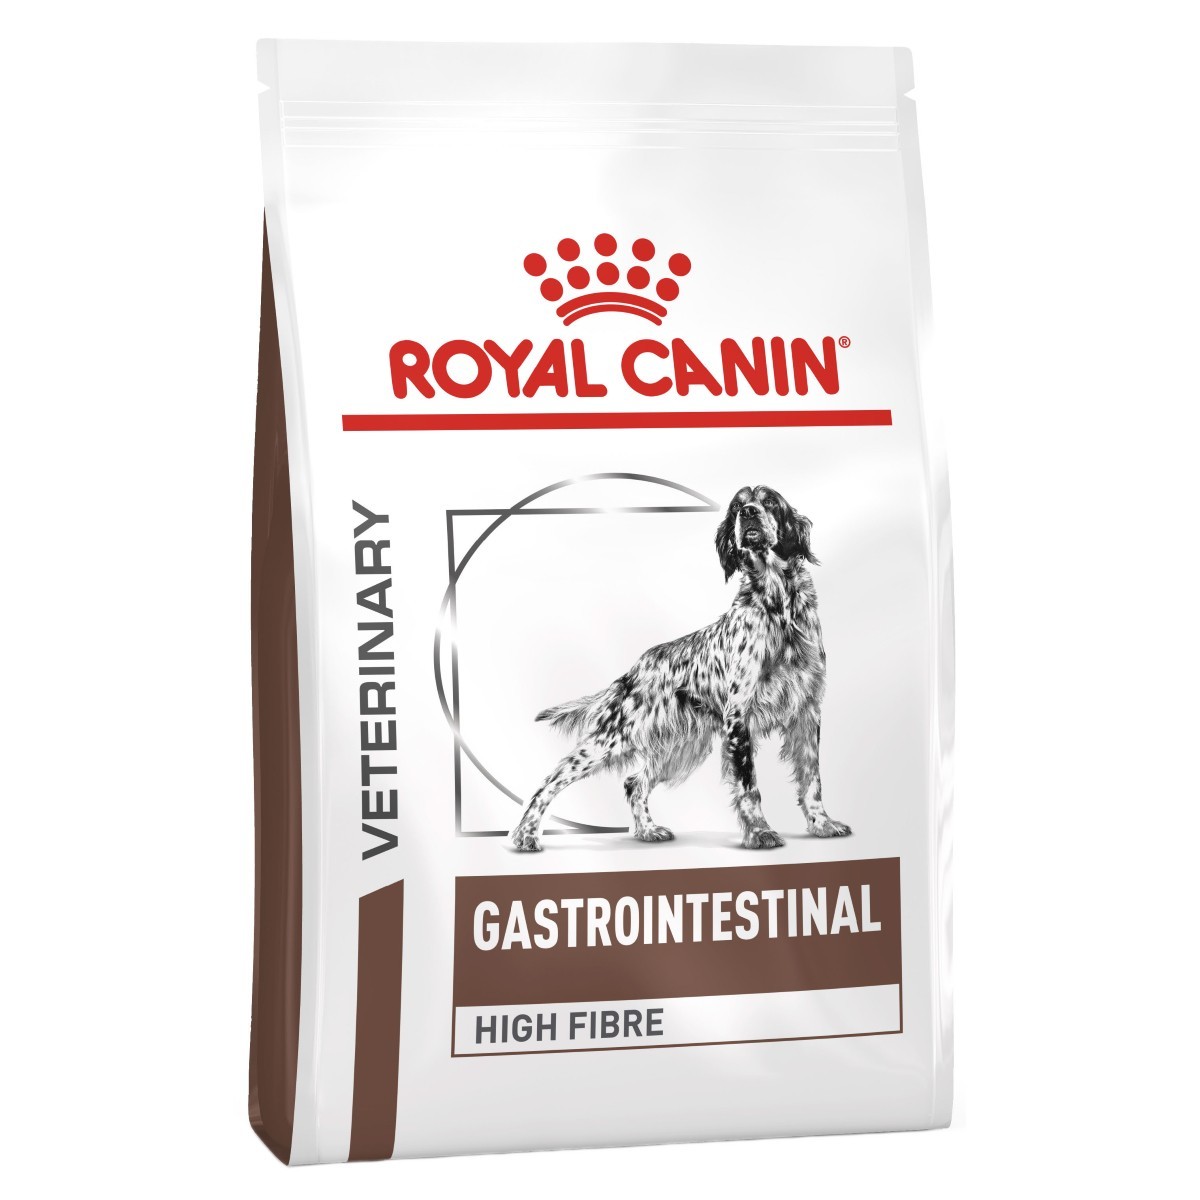 Royal Canin Gastrointestinal High Fibre 